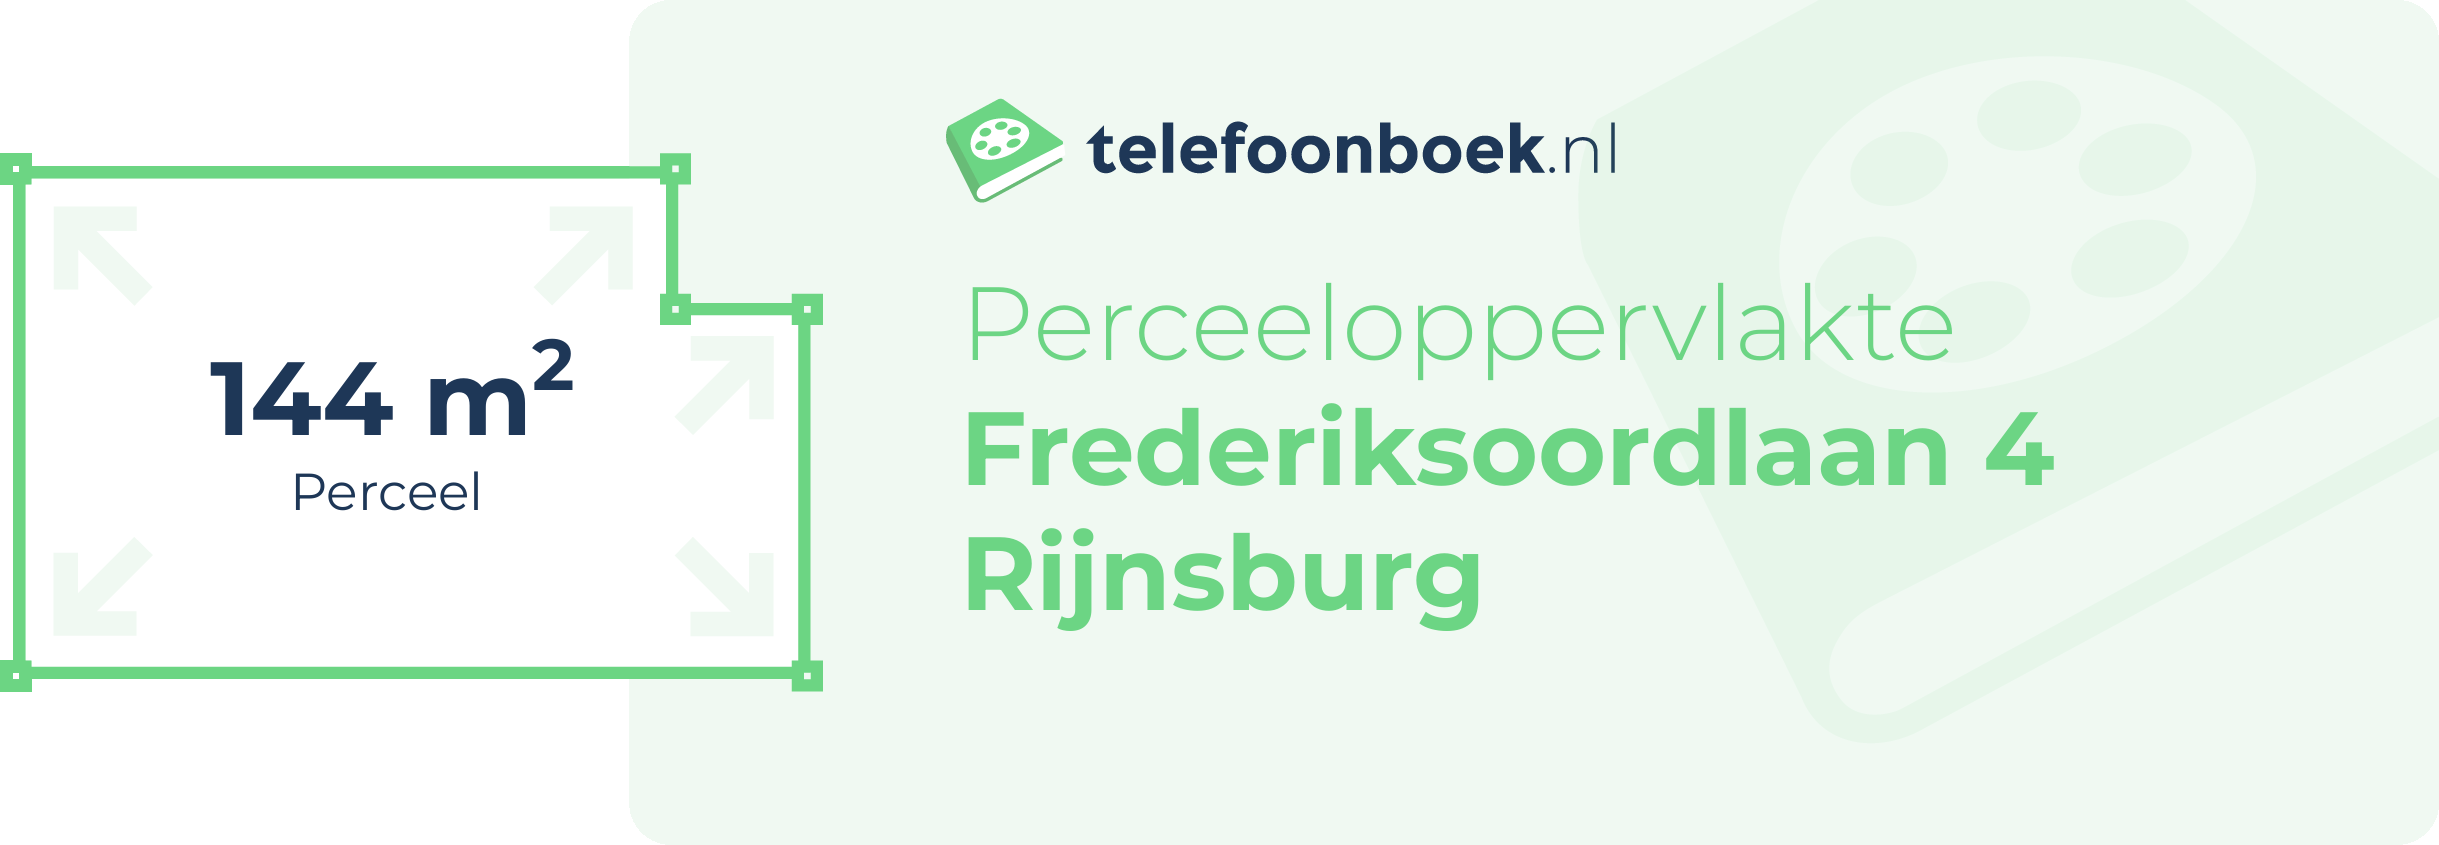 Perceeloppervlakte Frederiksoordlaan 4 Rijnsburg